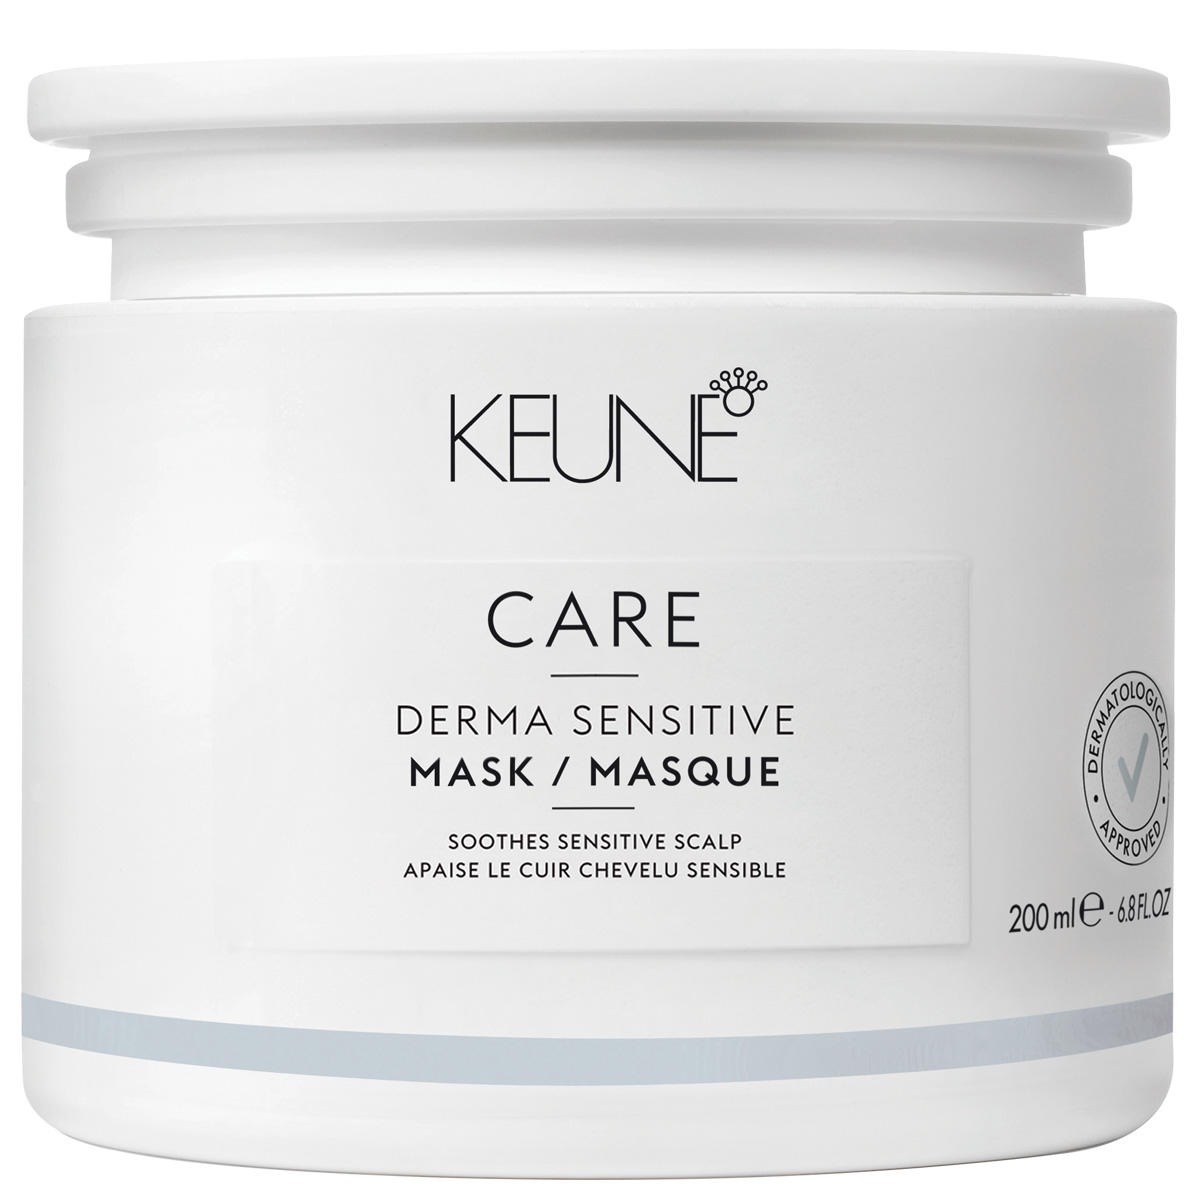 KEUNE CARE Derma Sensitive Mask  - 1